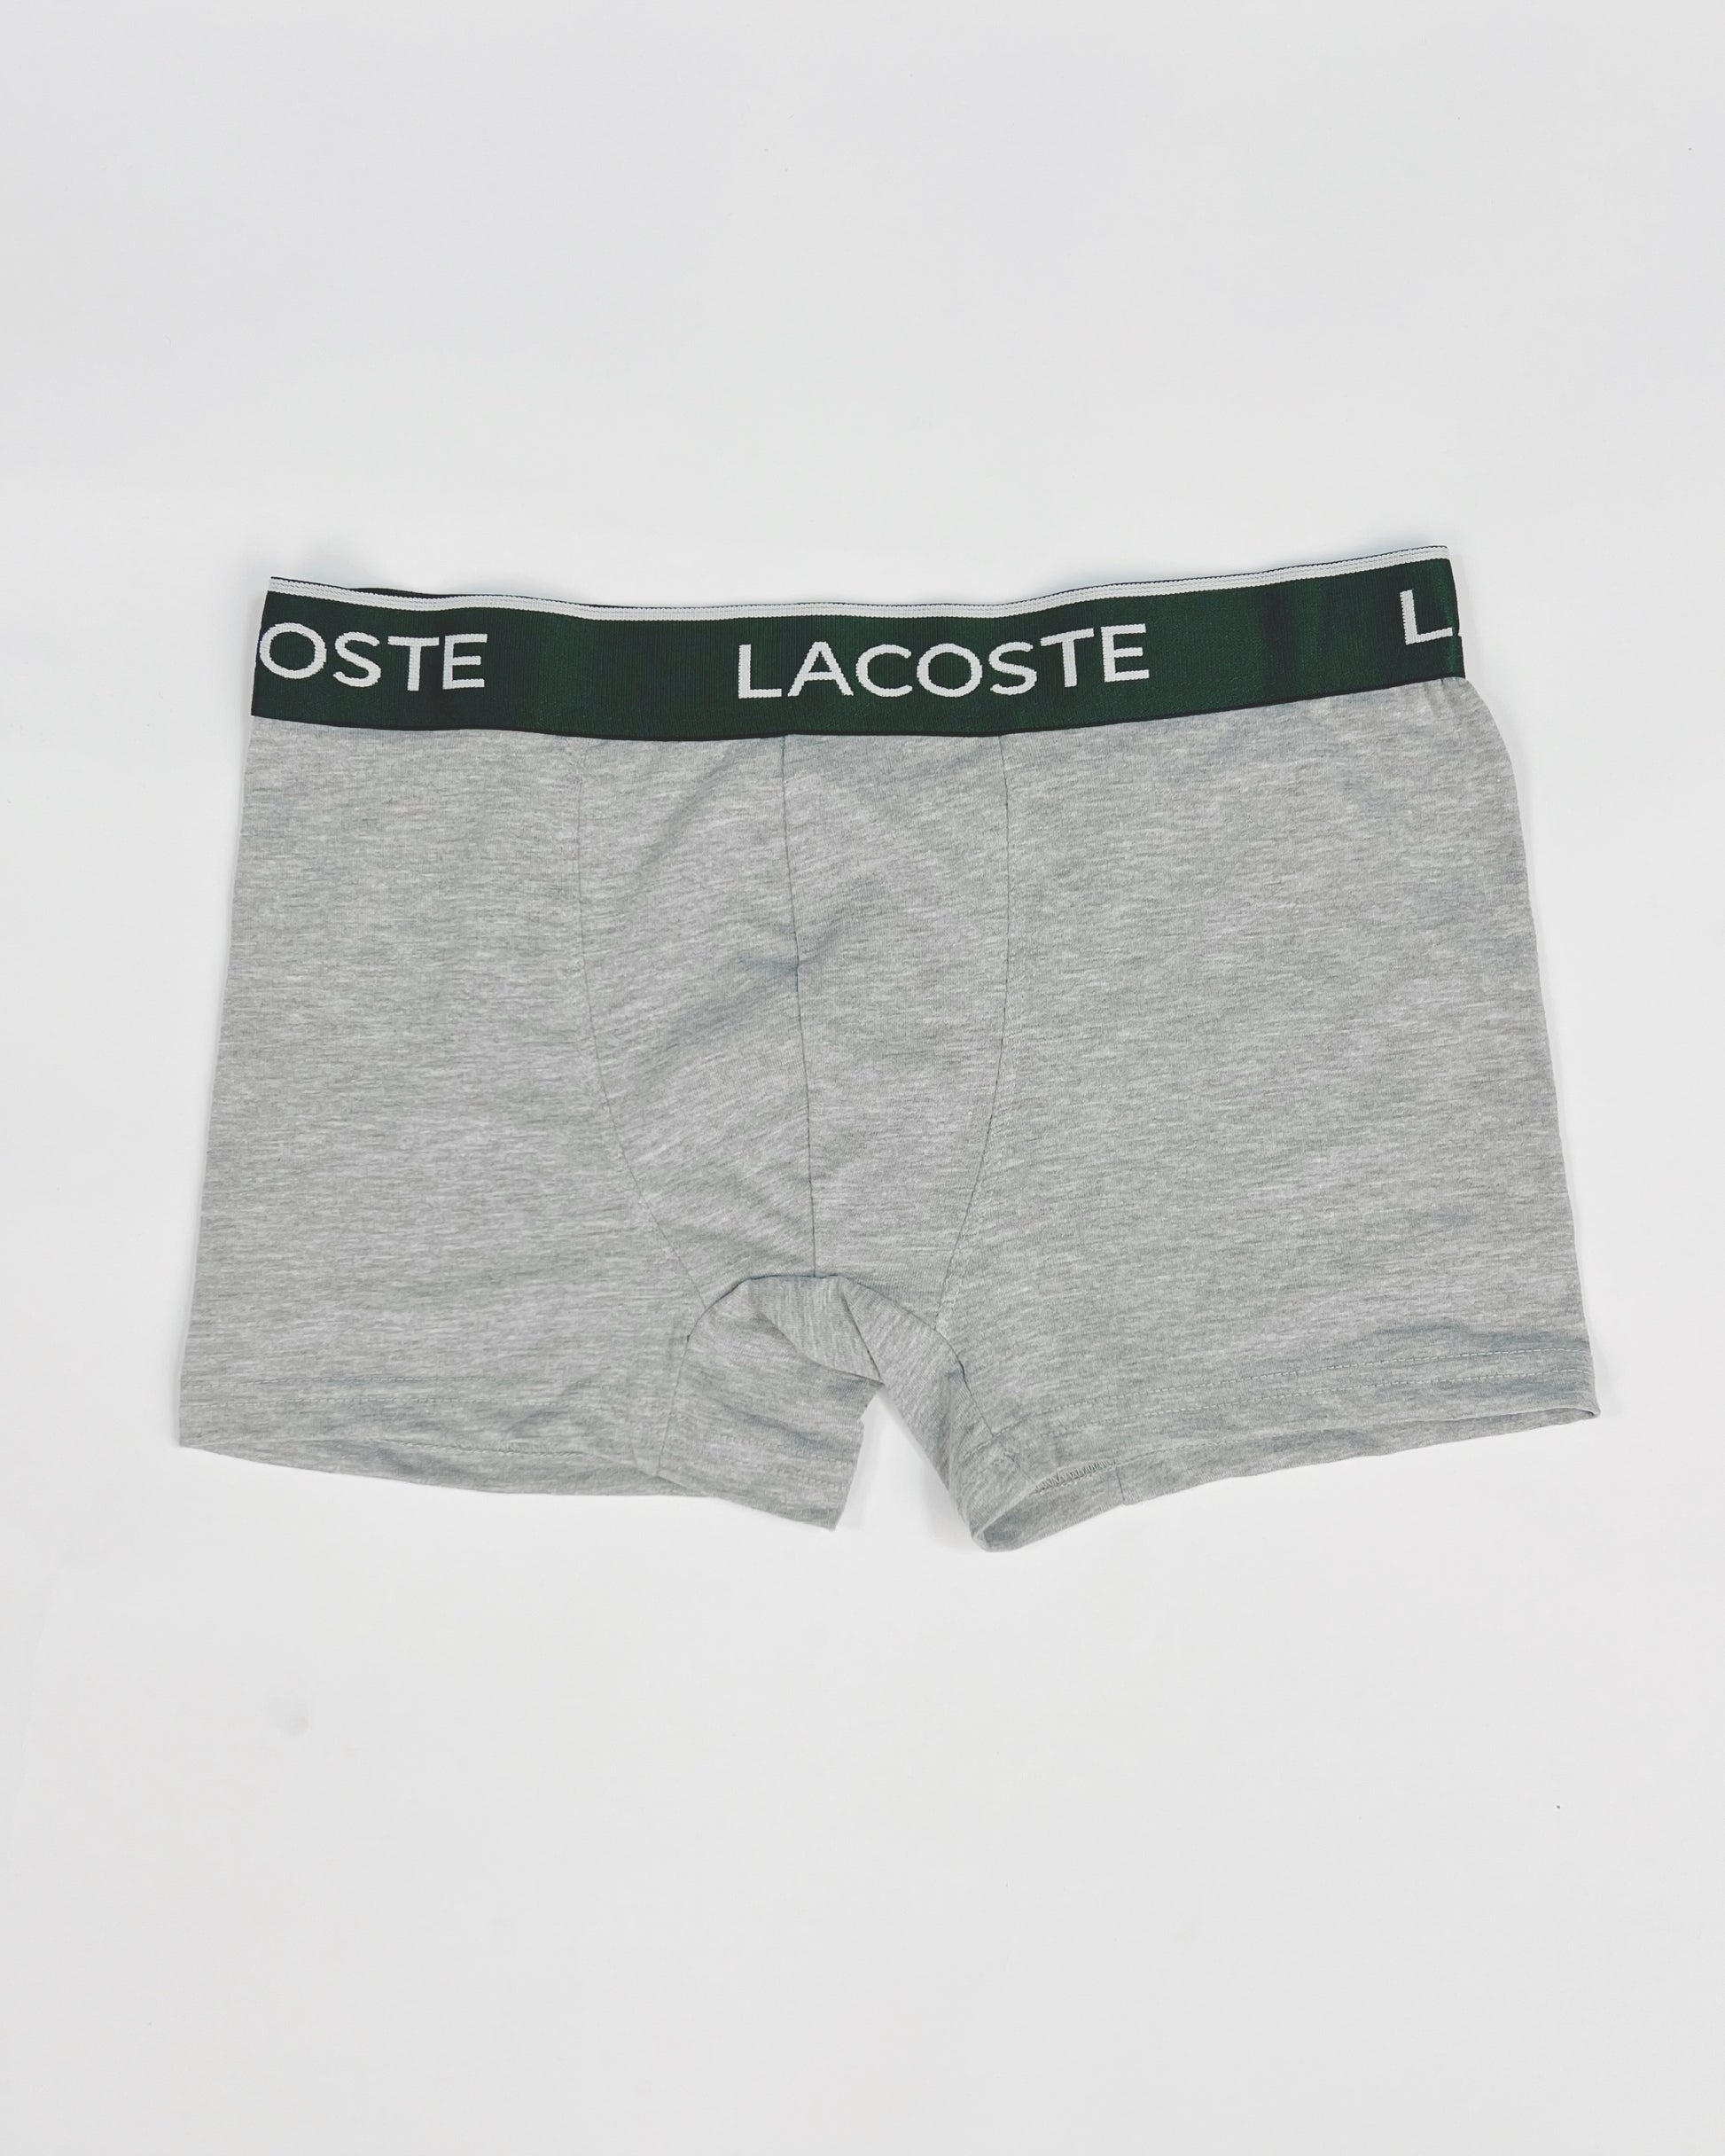 Gucci Underwear for Men, 3pcs Pack - Lagmall Online Market Nigeria